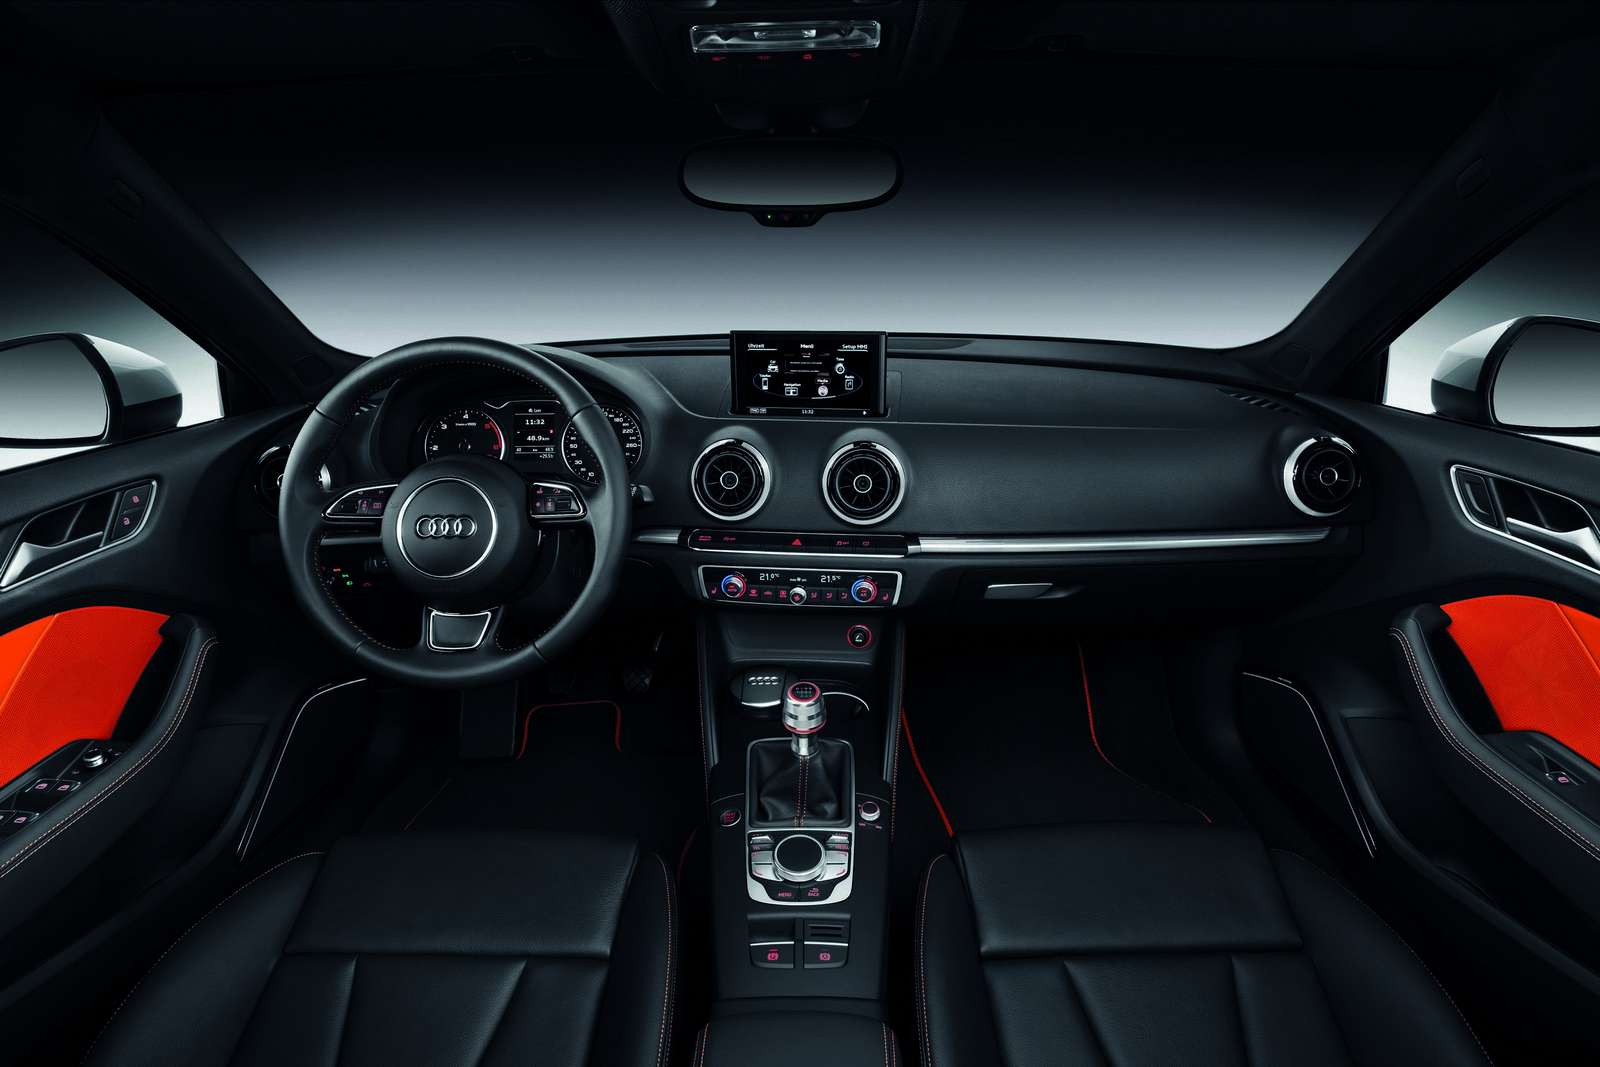 Audi A3 Sportback 2013